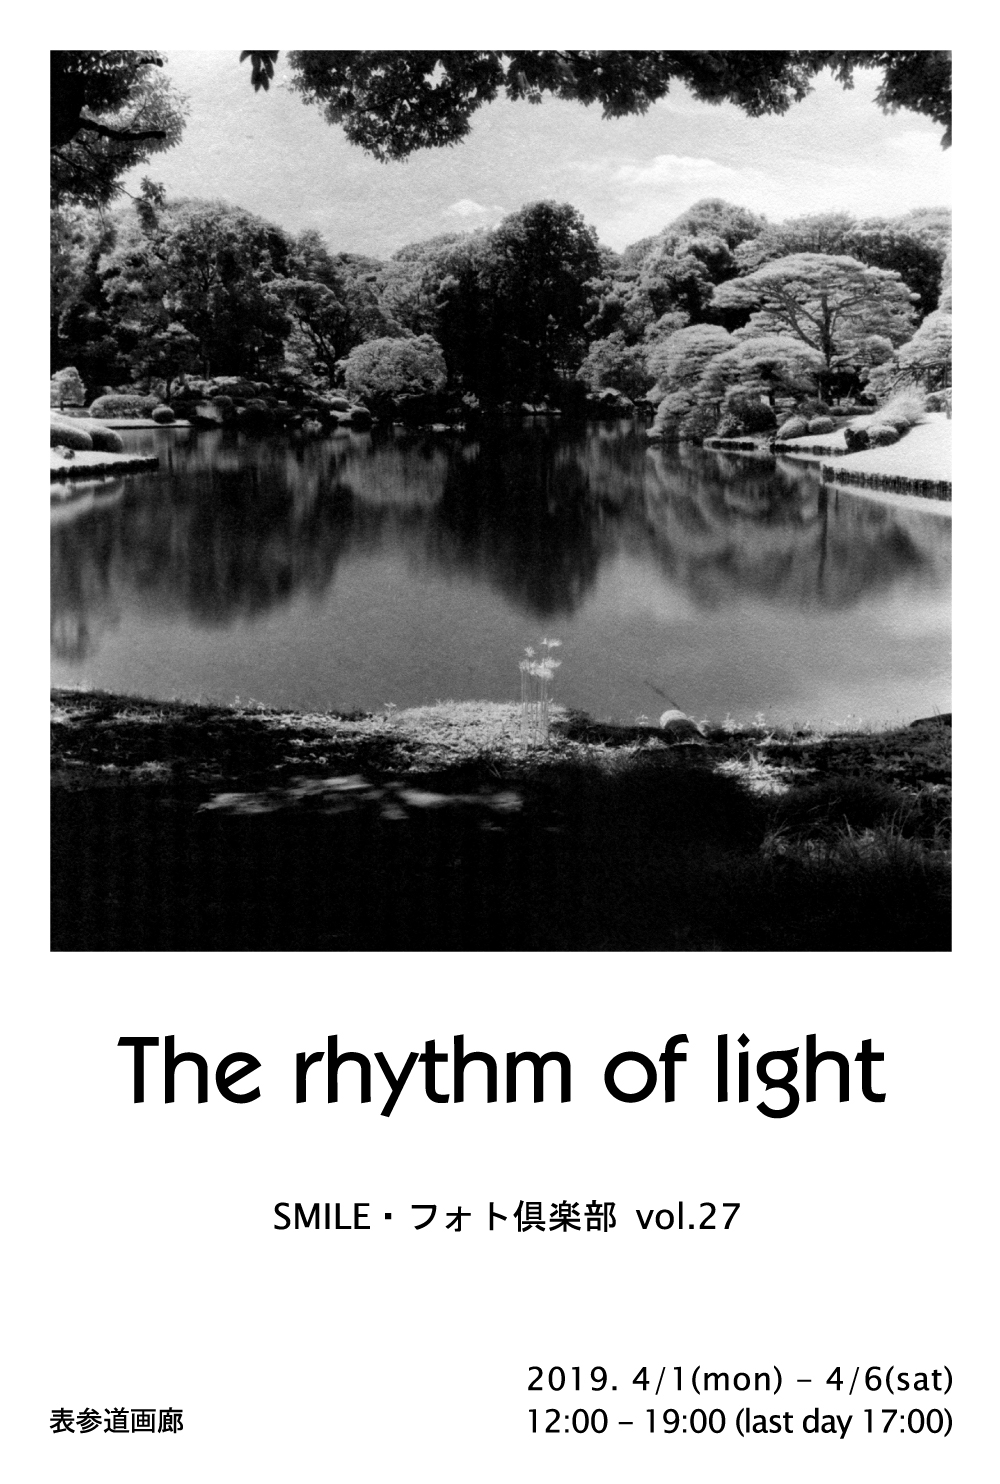 SMILE・フォト倶楽部 vol.27 / The rhythm of light